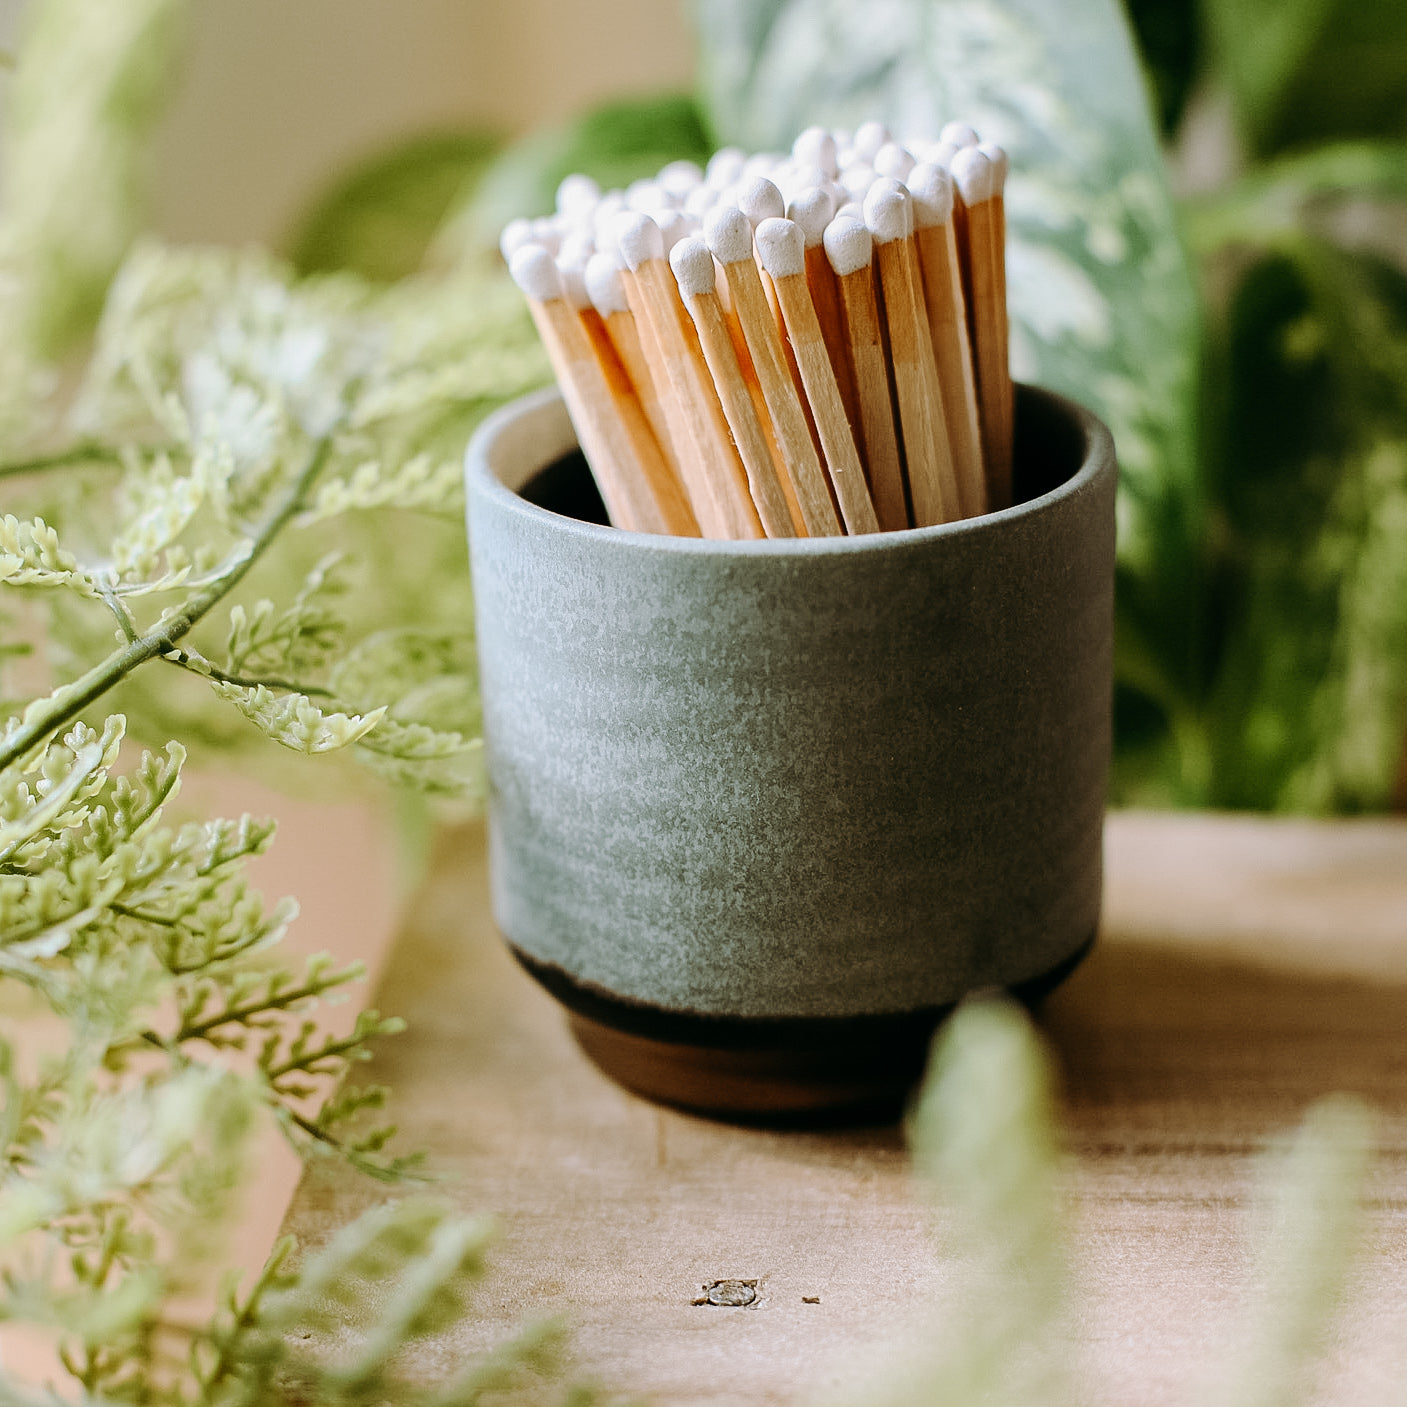 Ceramic match pot and matches